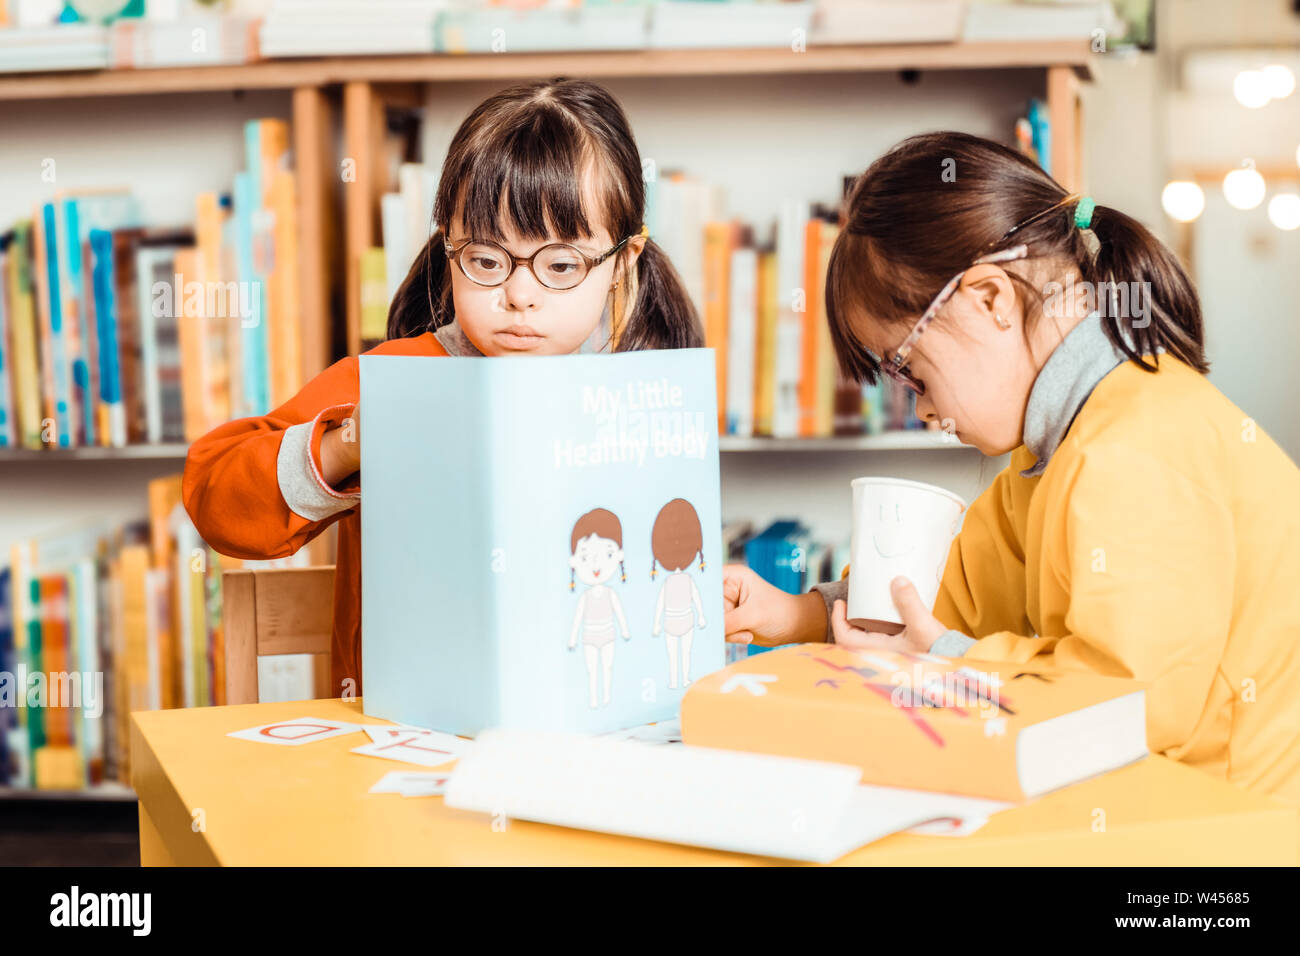 Dunkelhaarige Mädchen in hellen Hemden besetzt mit Lernmaterialien Stockfoto